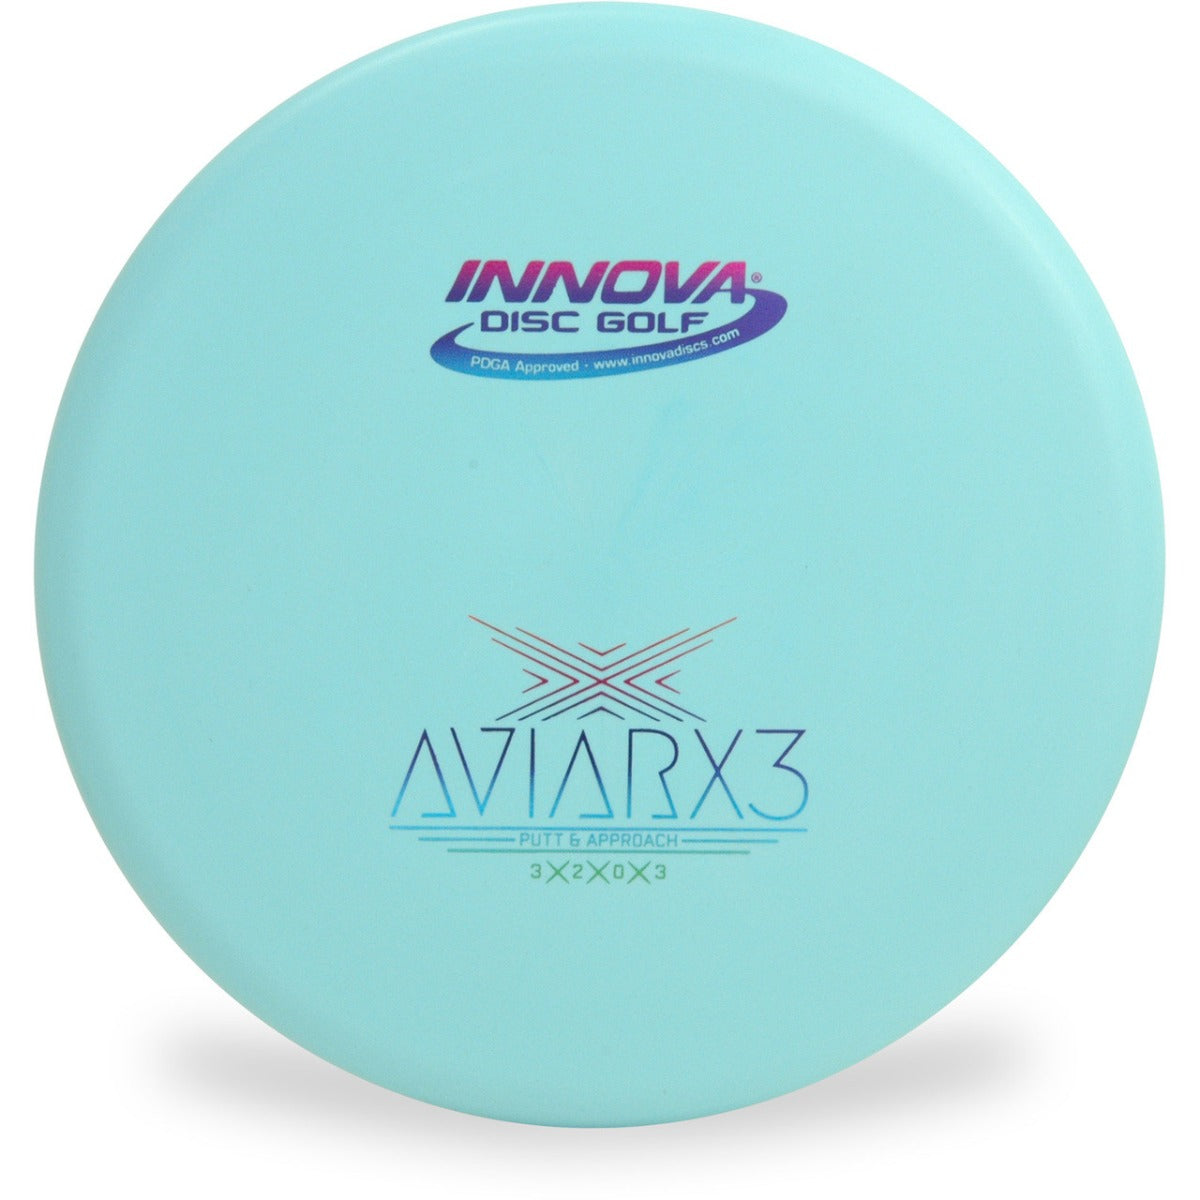 Innova AviarX3